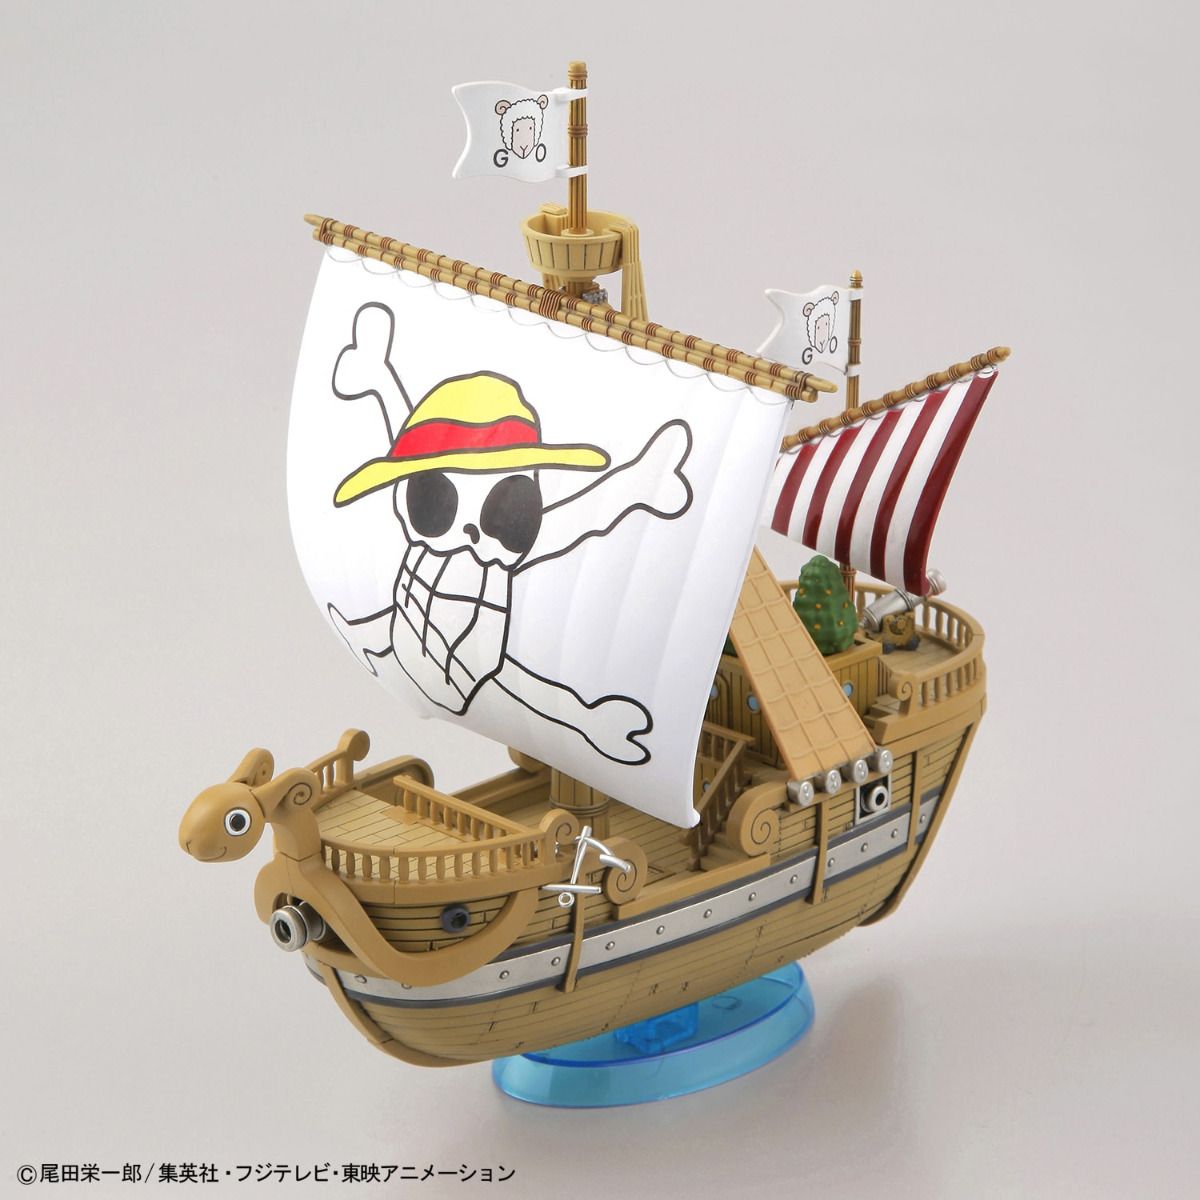 Bandai Hobby Going Merry Model Ship One Piece